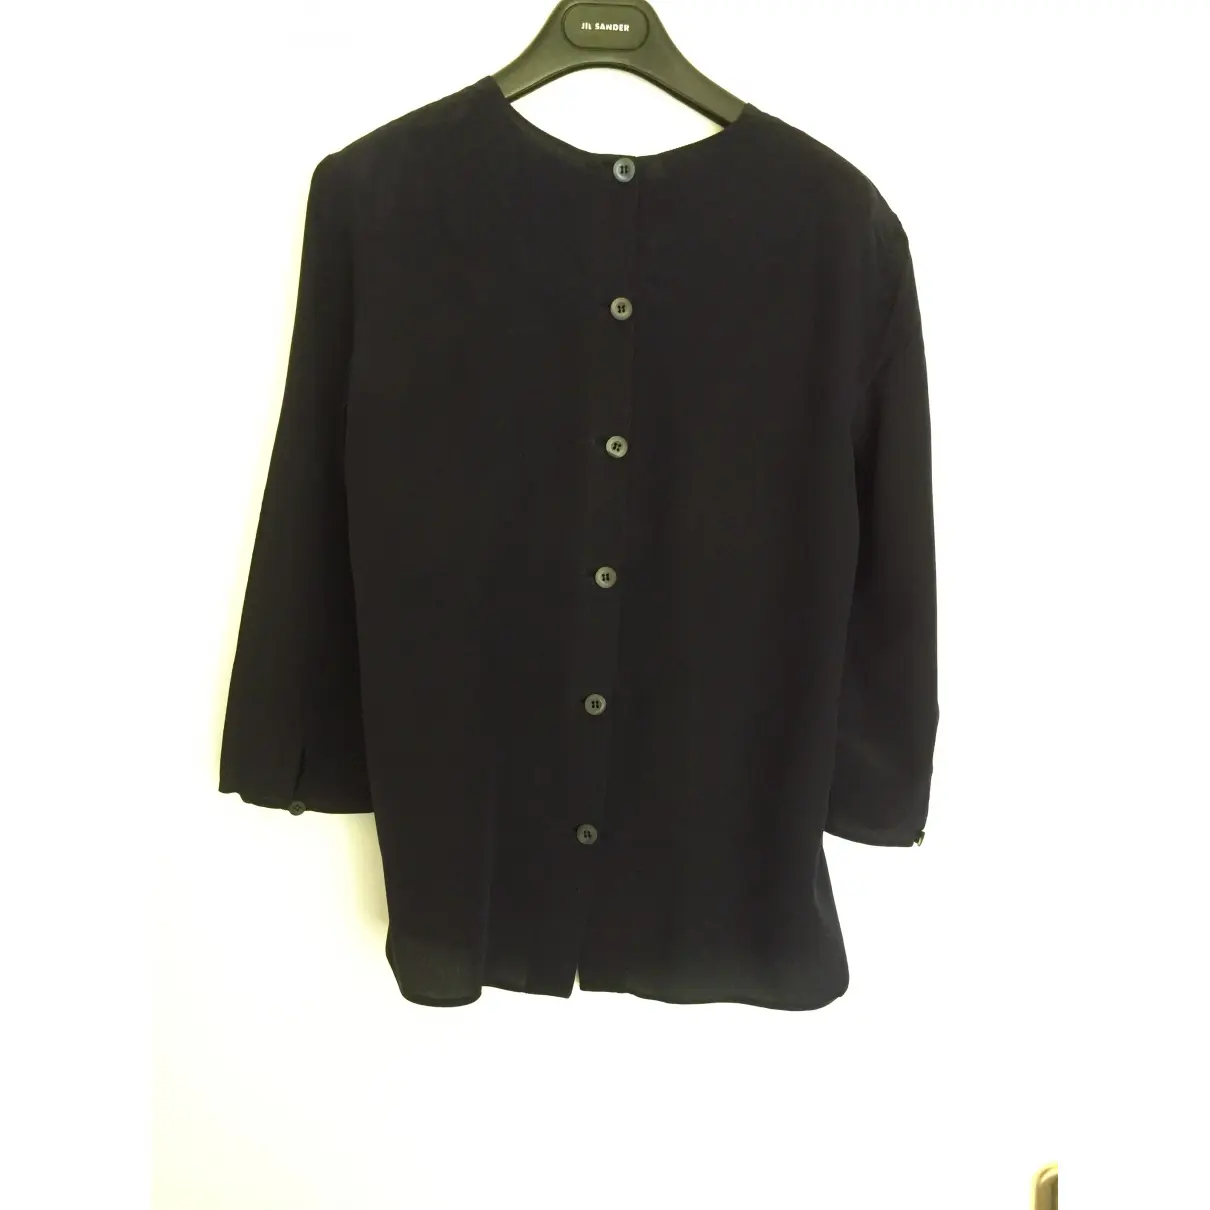 Buy Prada Silk blouse online